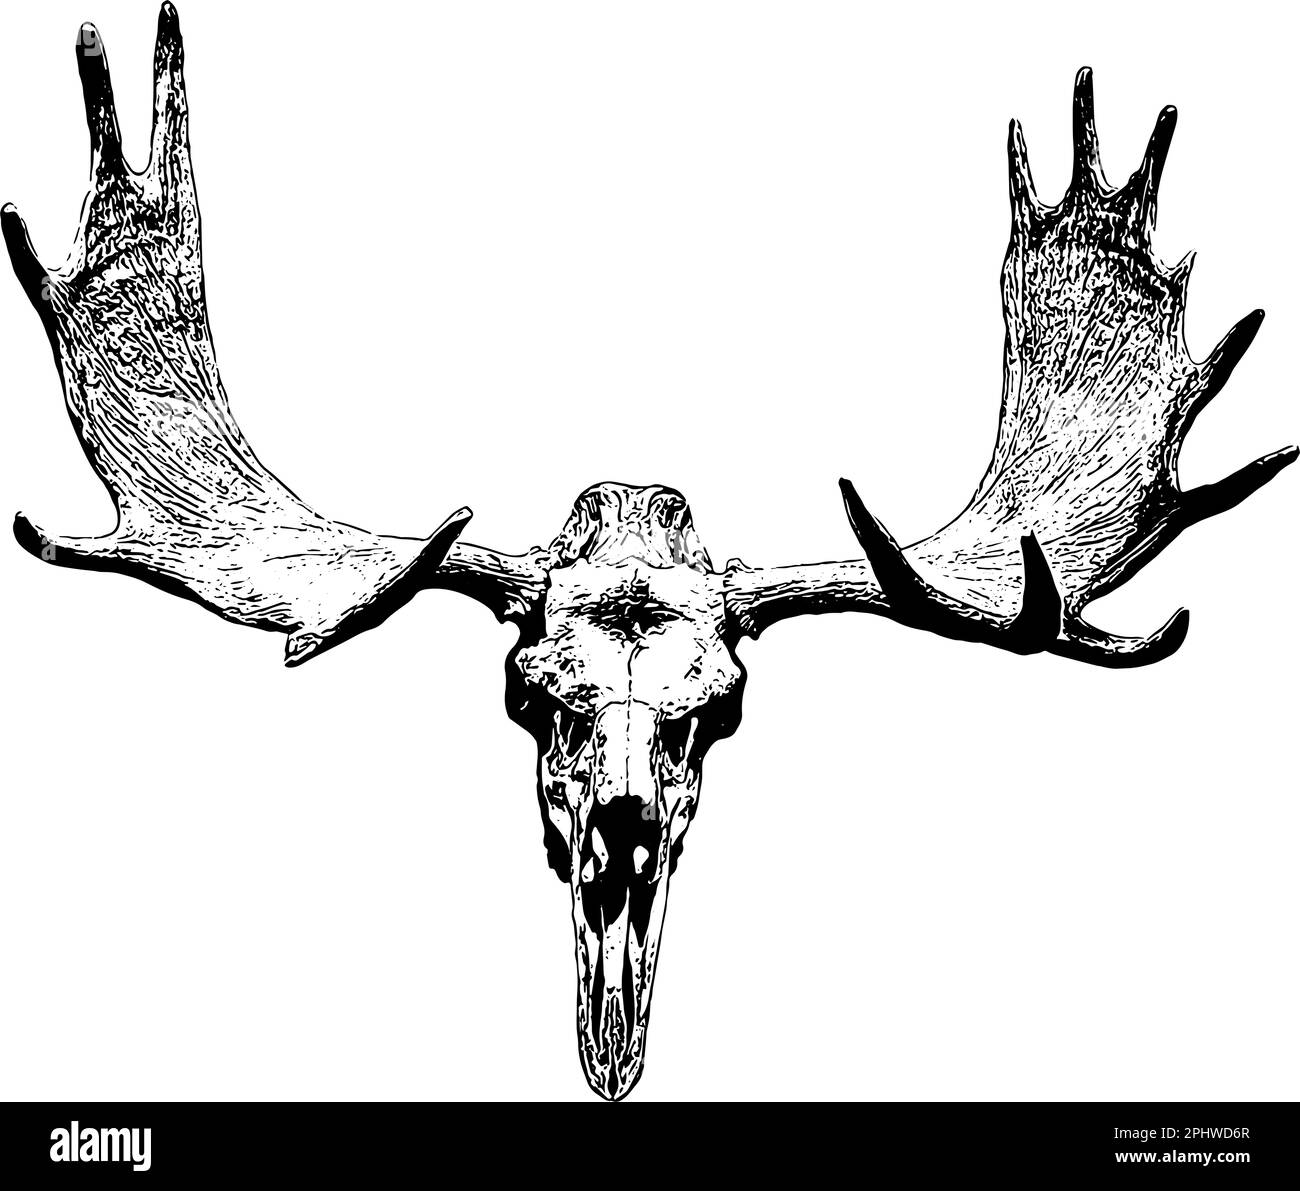 Moose skull and antlers sketch illustration Stock Vector